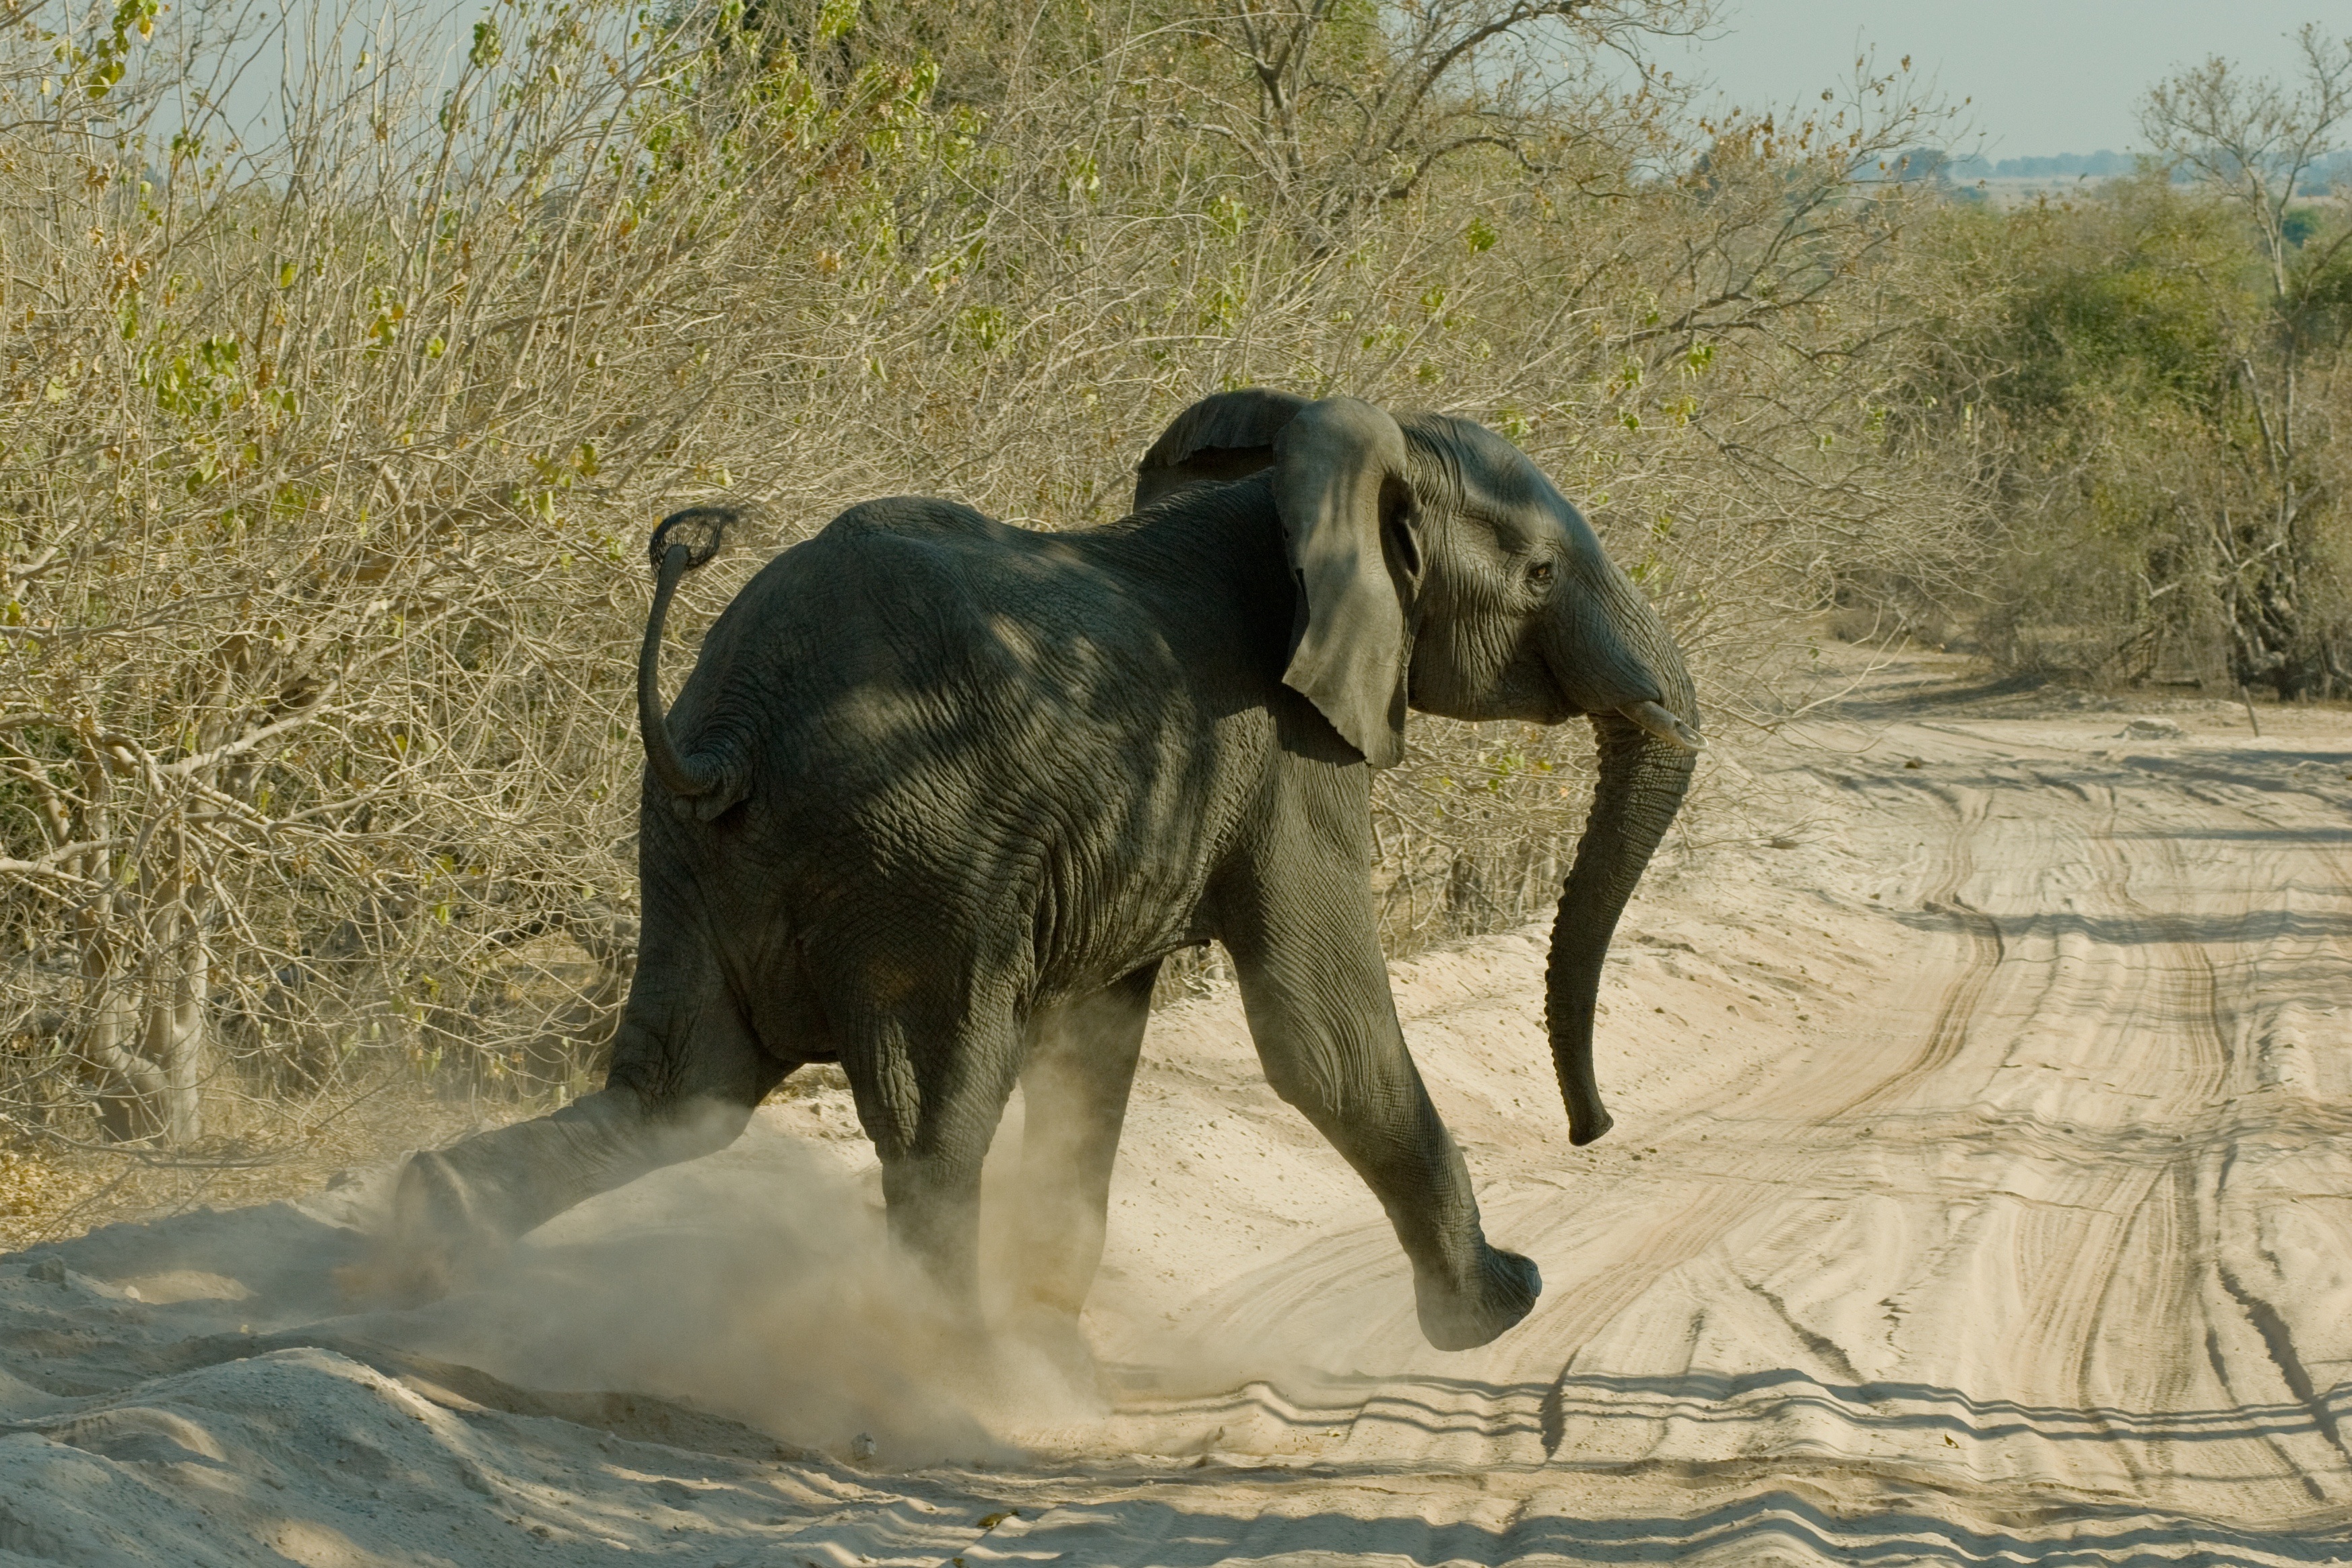 Free photo The little elephant runs along the sandy road